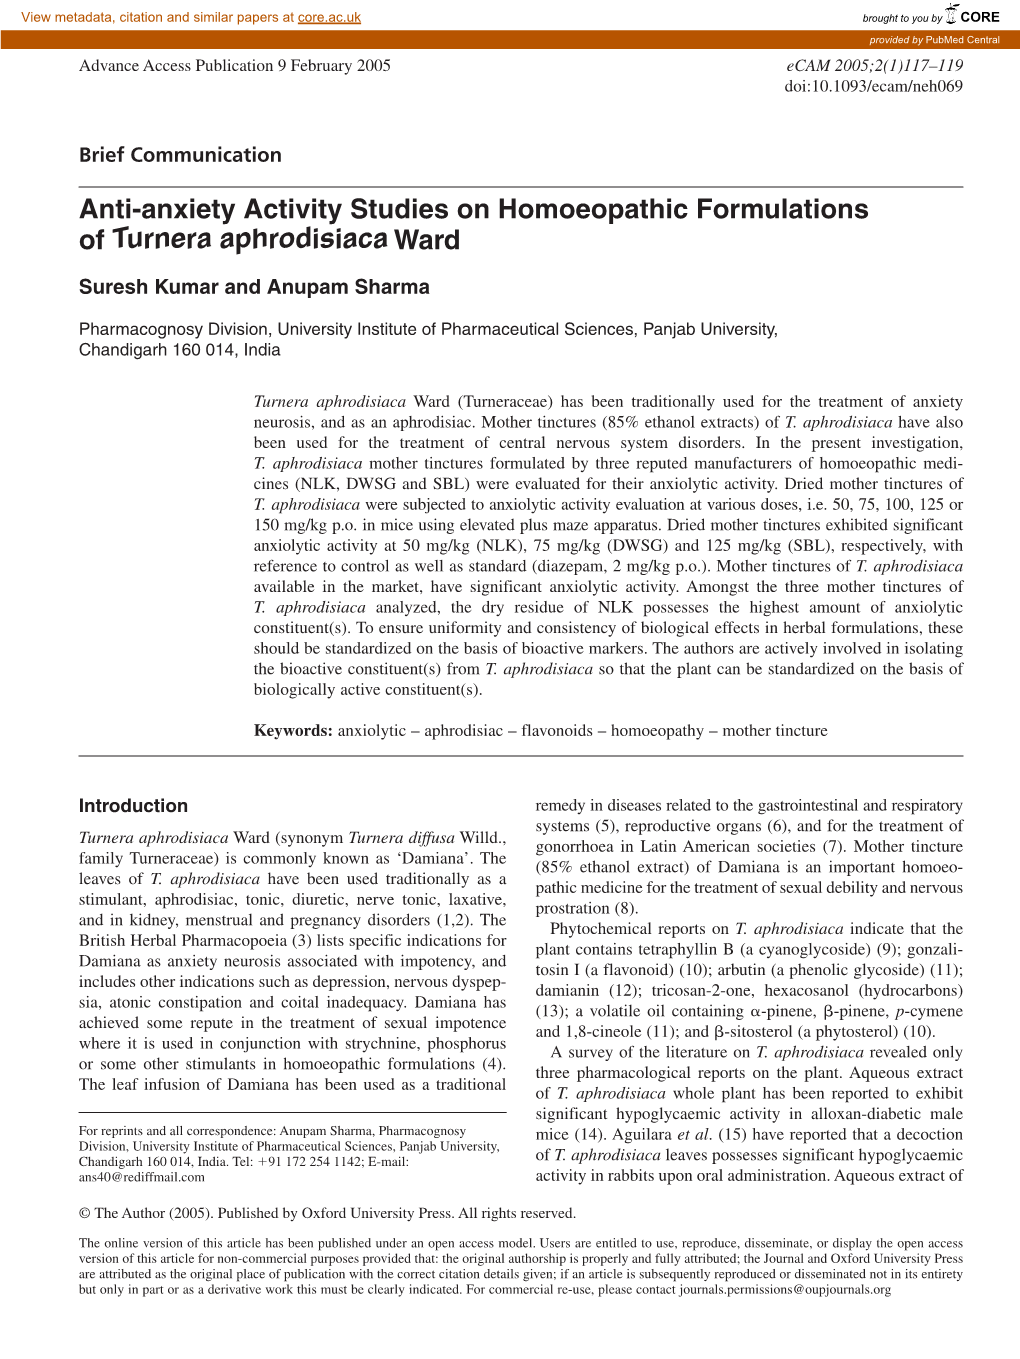 Anti-Anxiety Activity Studies on Homoeopathic Formulations of Turnera Aphrodisiaca Ward